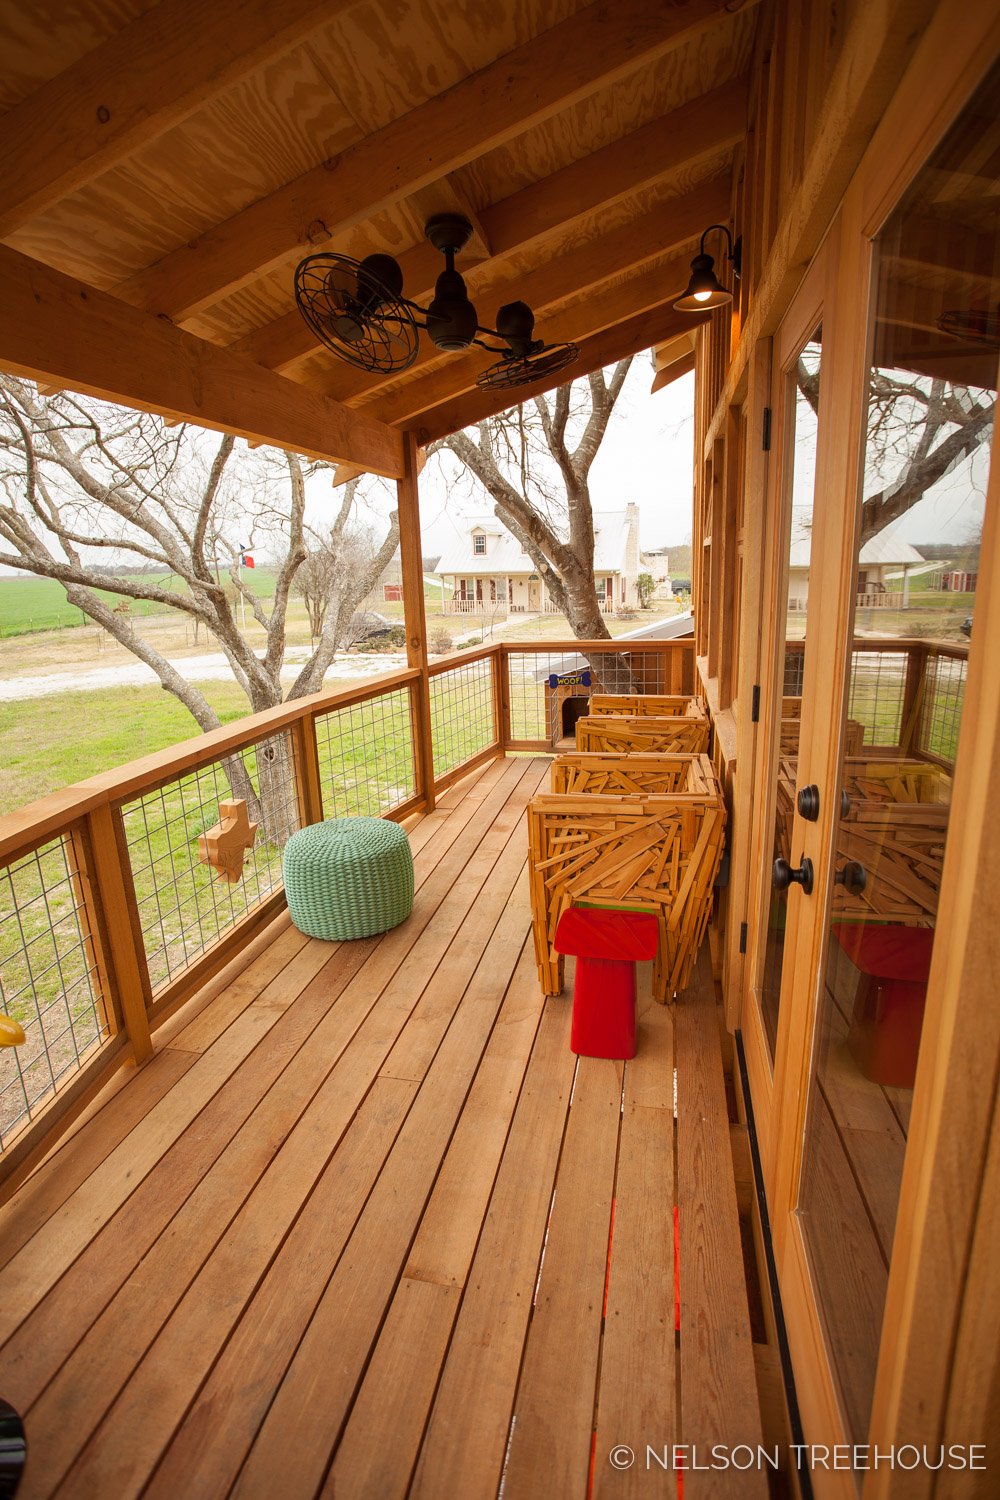  Nelson Treehouse - Twenty-Ton Texas Treehouse deck 